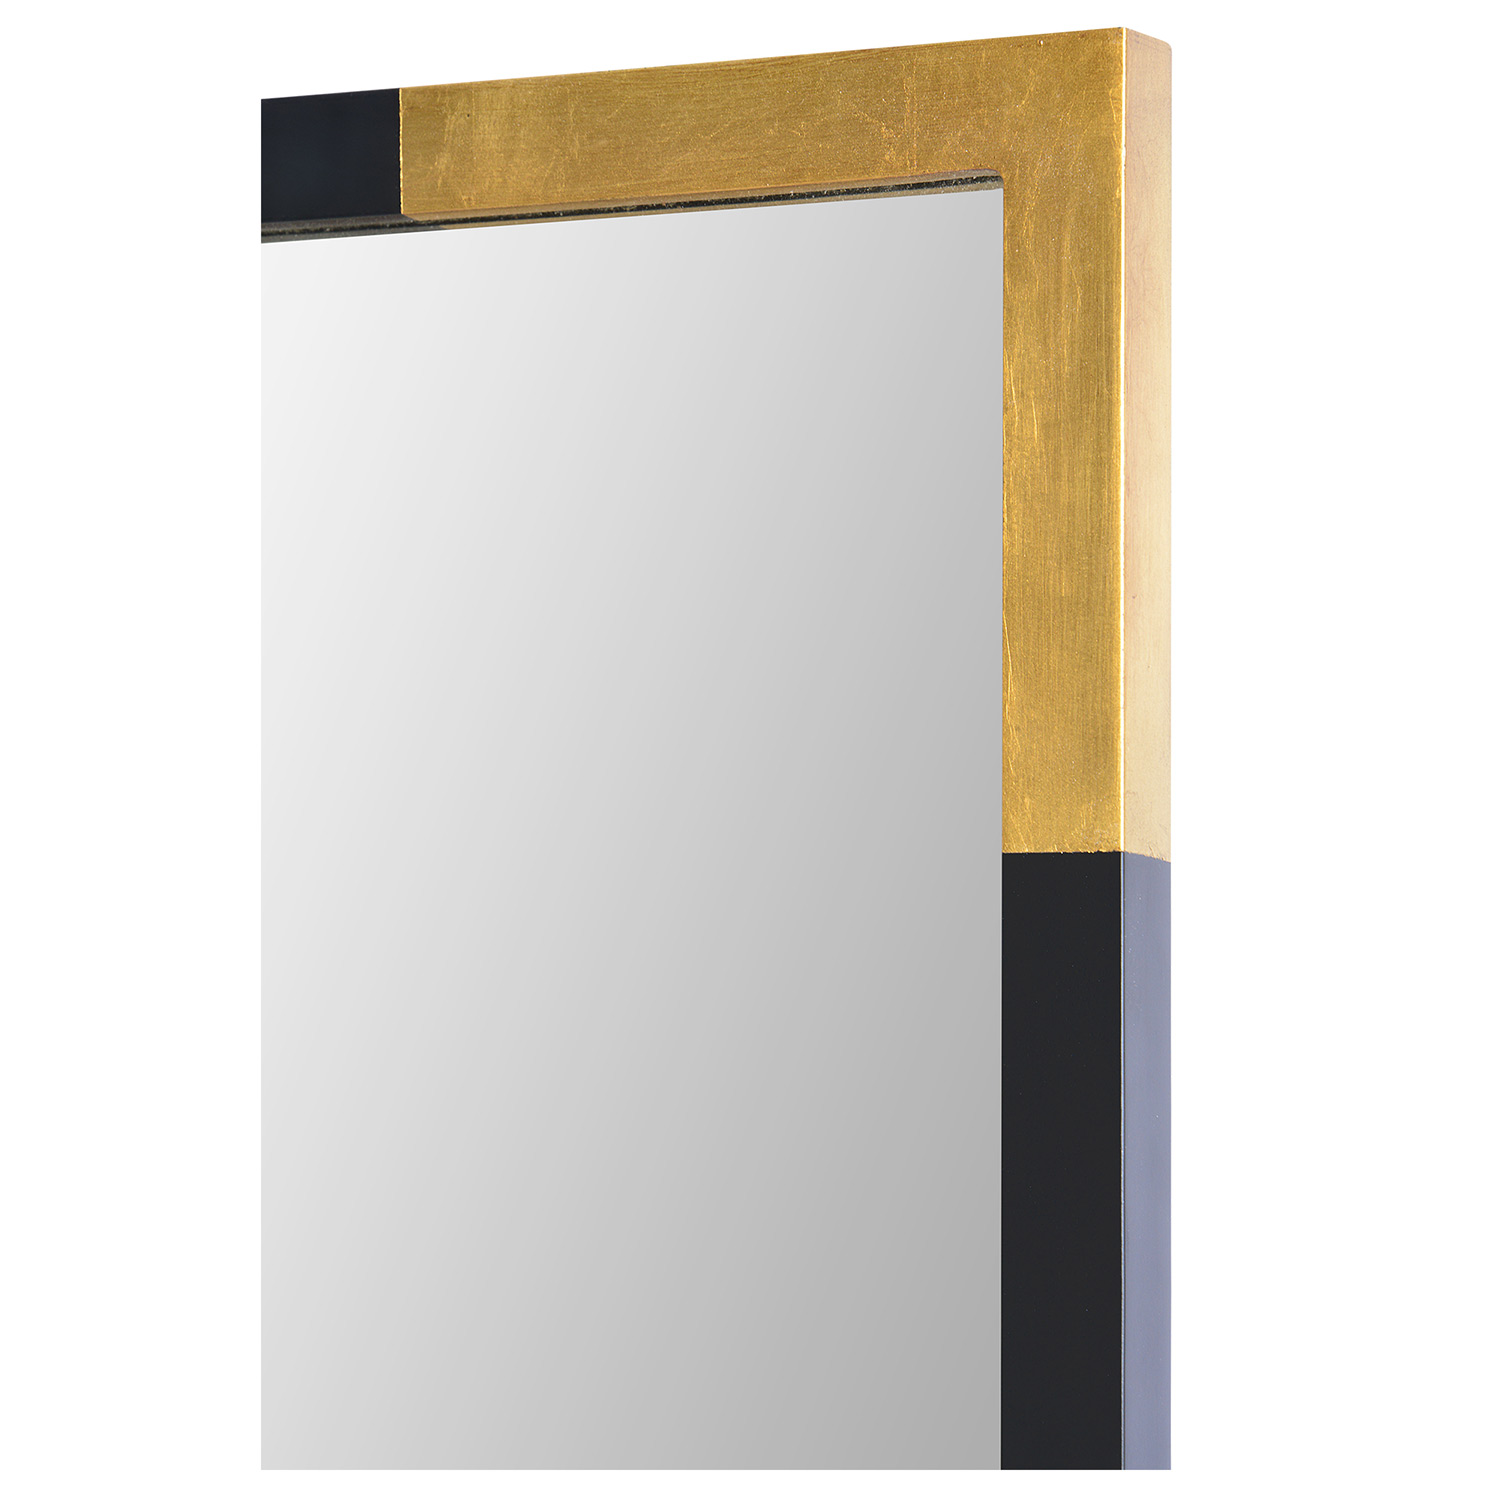 Ren-Wil Osmond Rectangular Mirror - Gold/Black